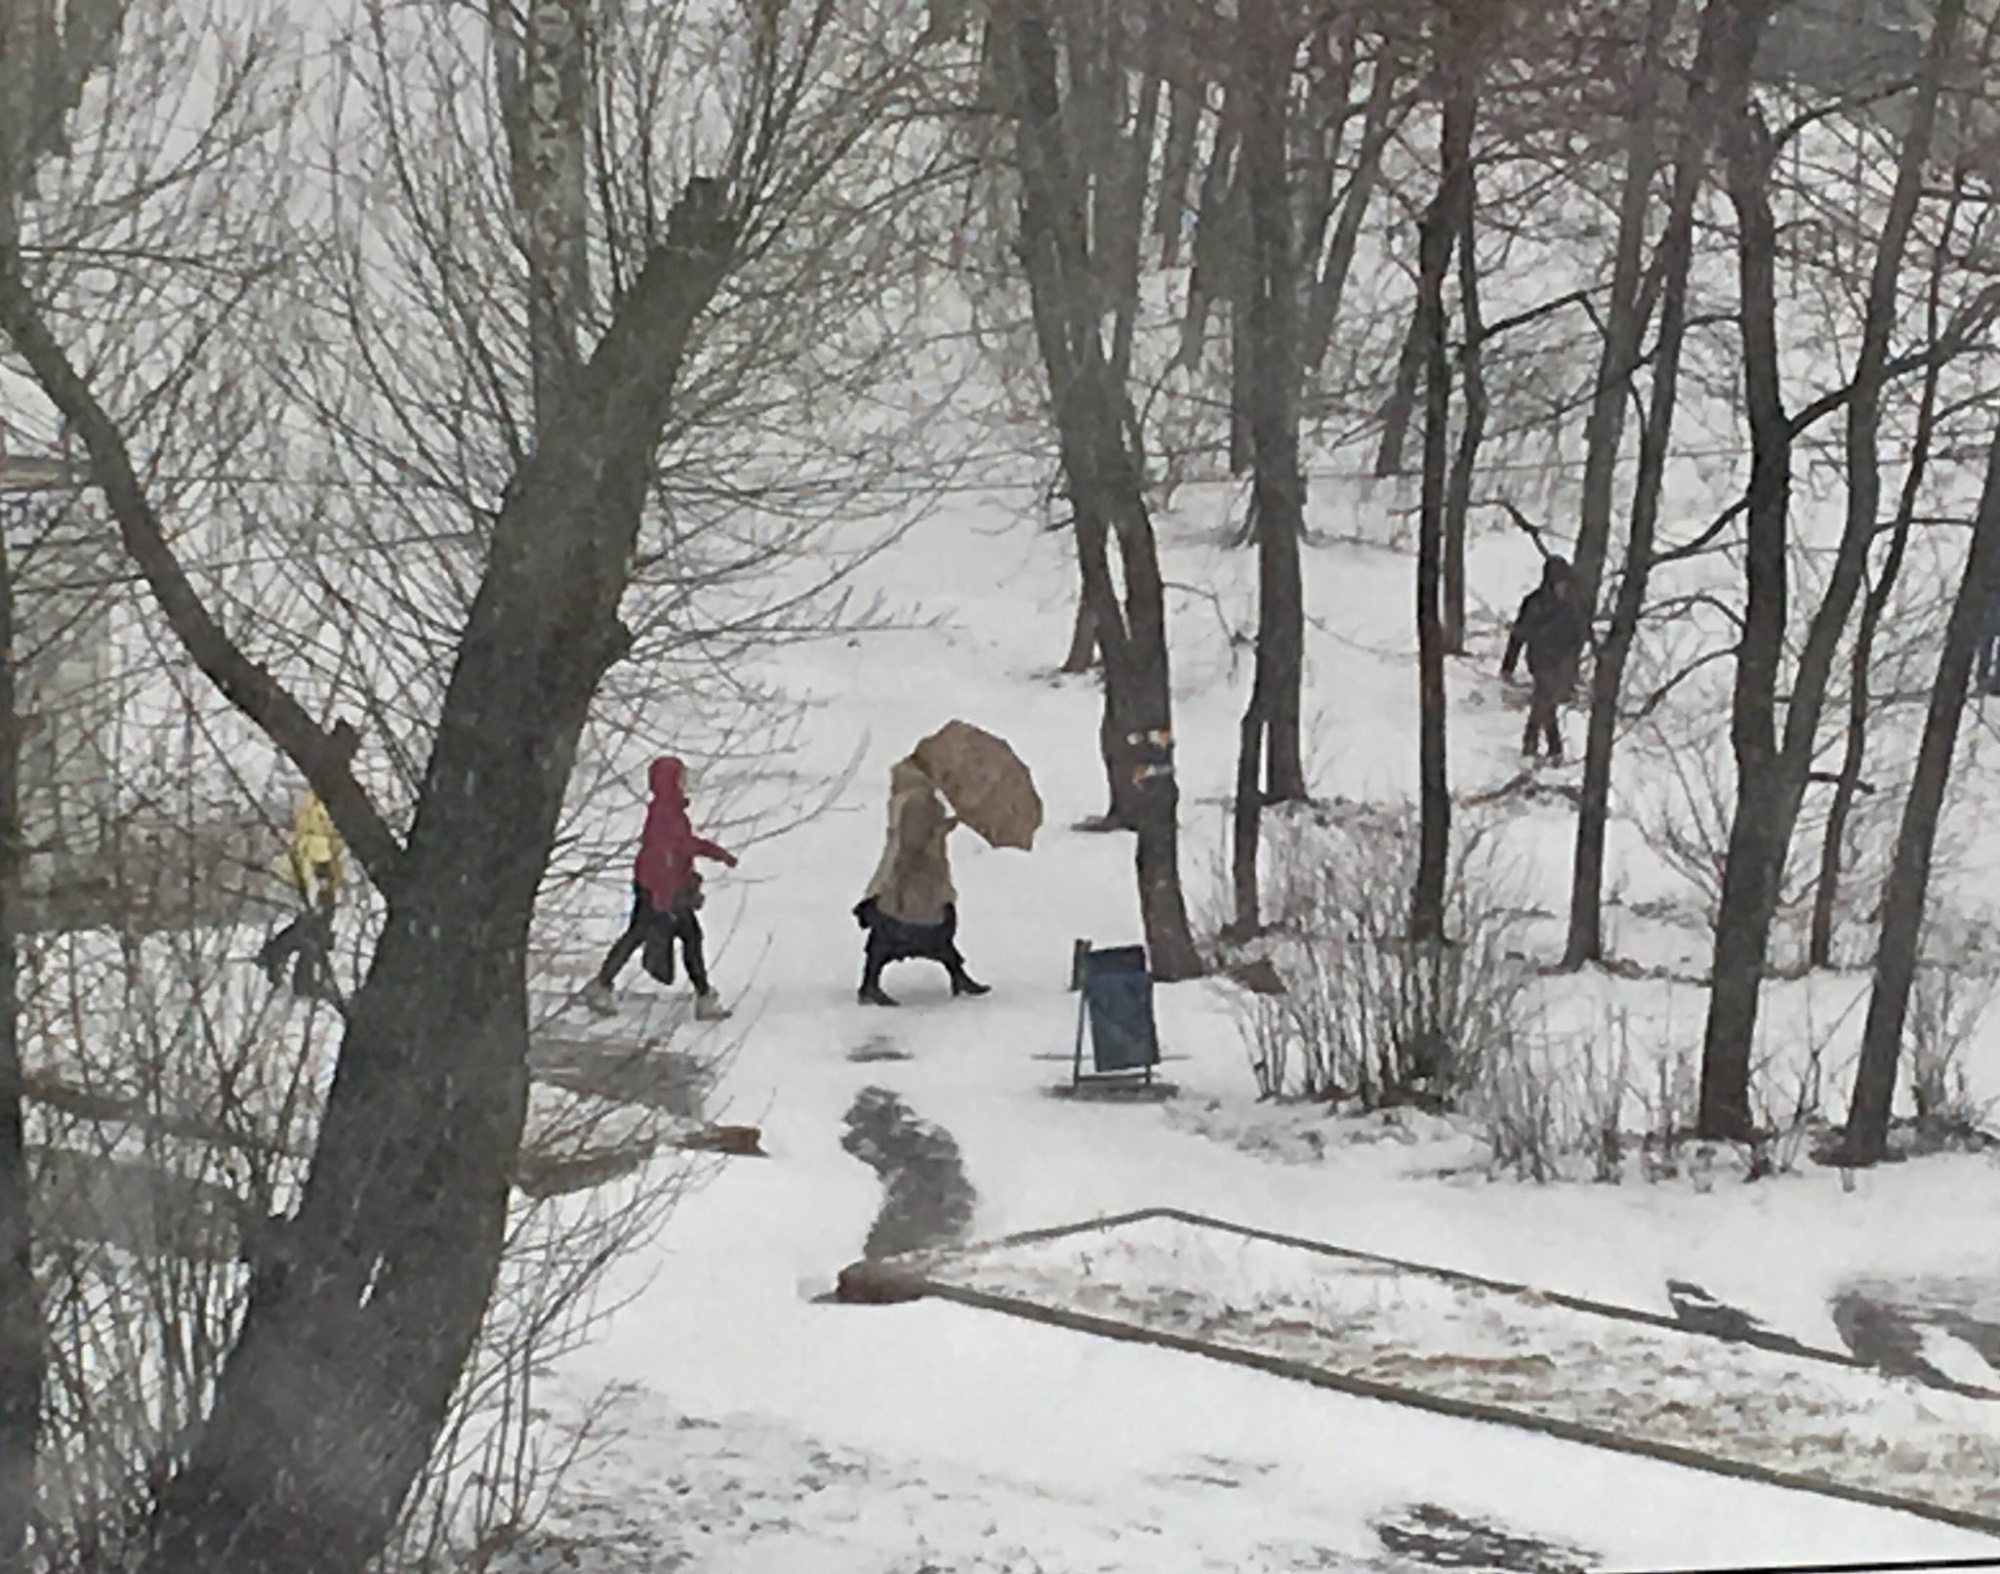 Мэри Поппинс ждала попутного ветра, а выпал снег.  <i class="_">Фото: Екатерина Воронкова</i>